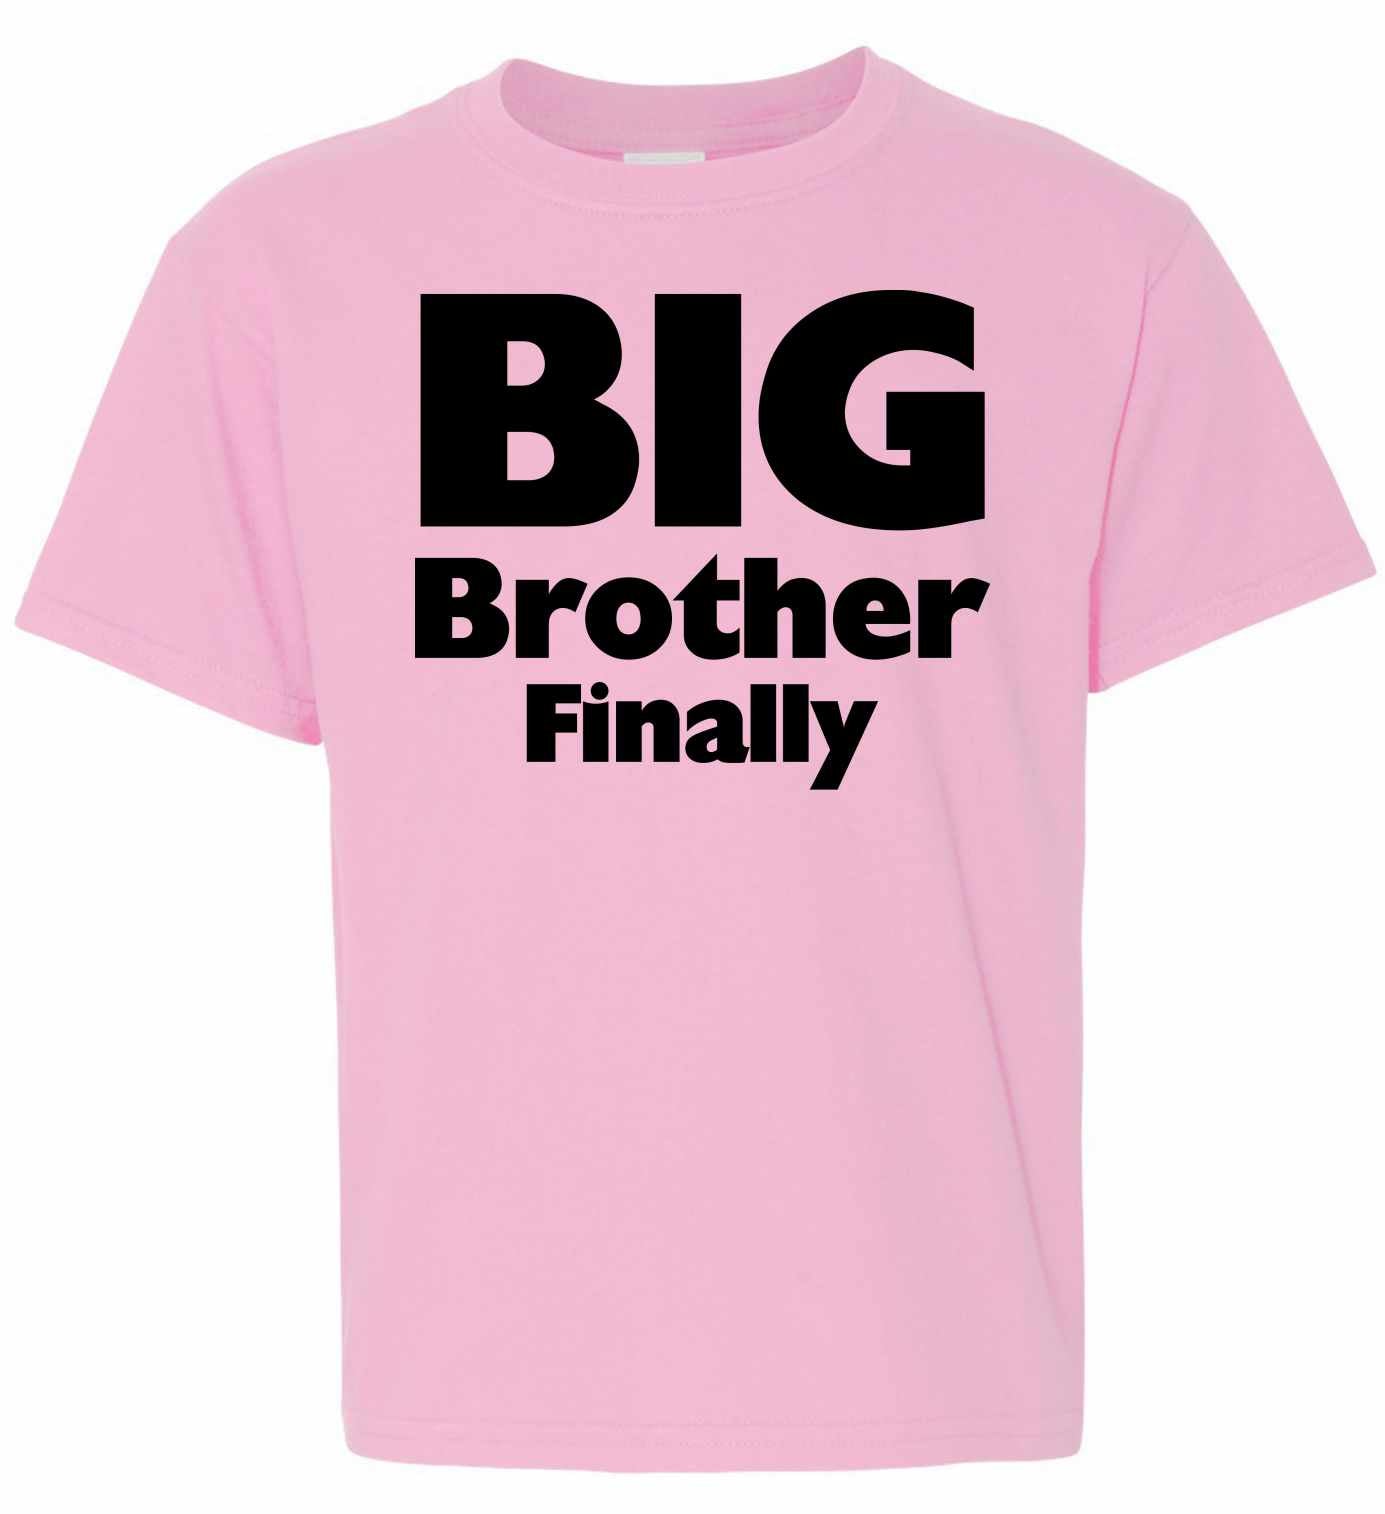 Big Brother Finally on Kids T-Shirt (#1334-201)